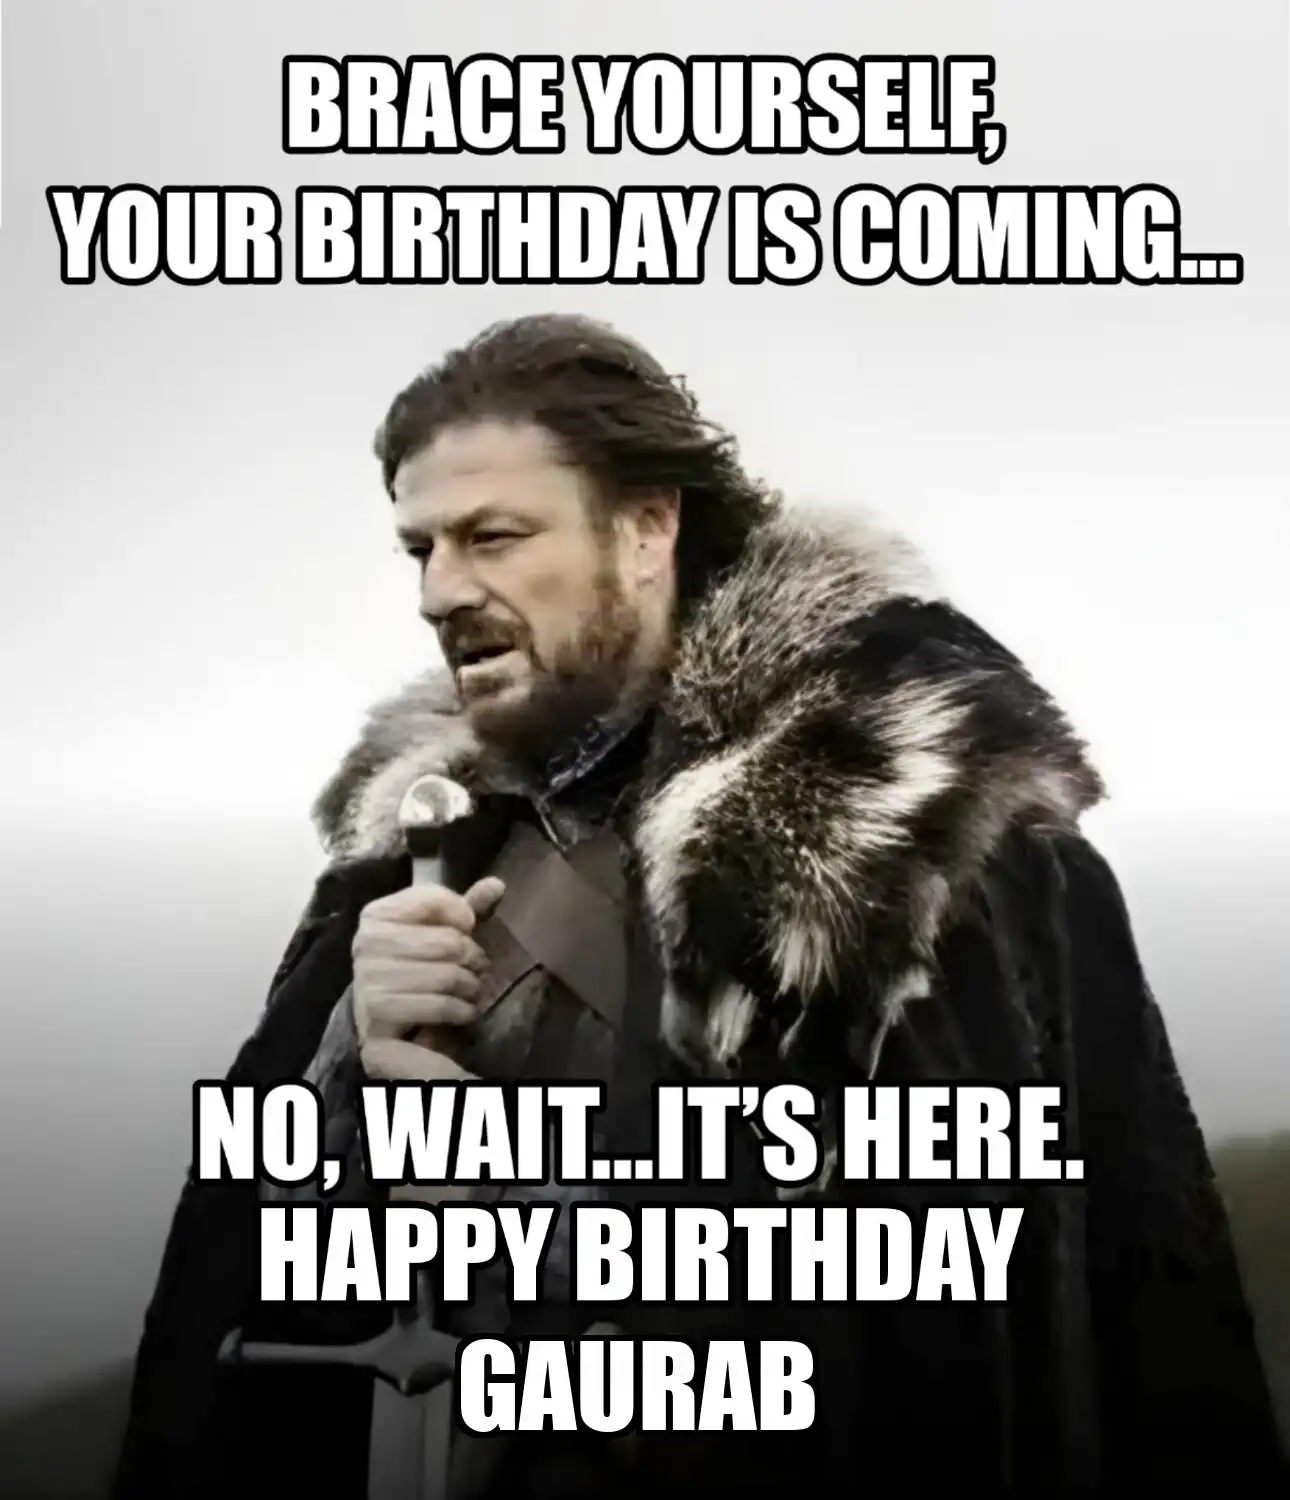 Happy Birthday Gaurab Brace Yourself Your Birthday Is Coming Meme